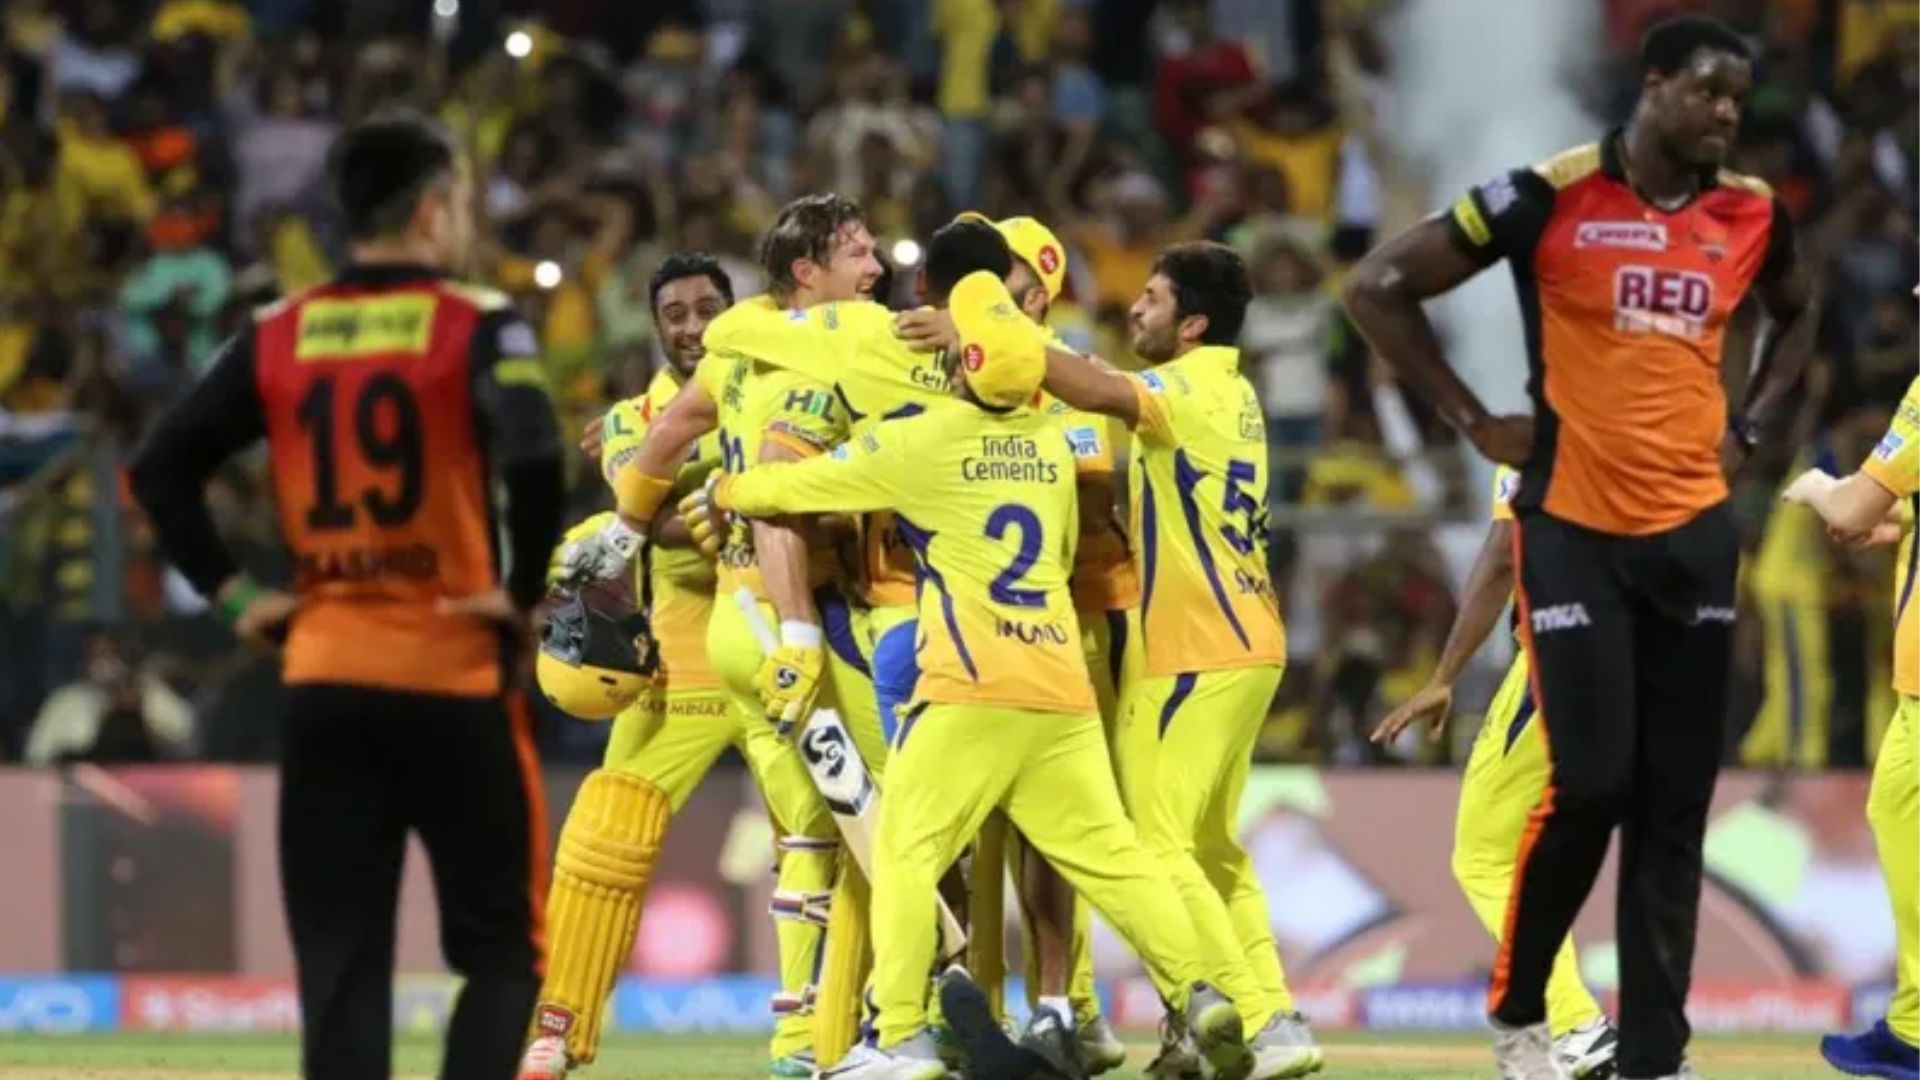 CSK players celebrate after defeating SRH in IPL 2018 final (Image: BCCI/iplt20.com)